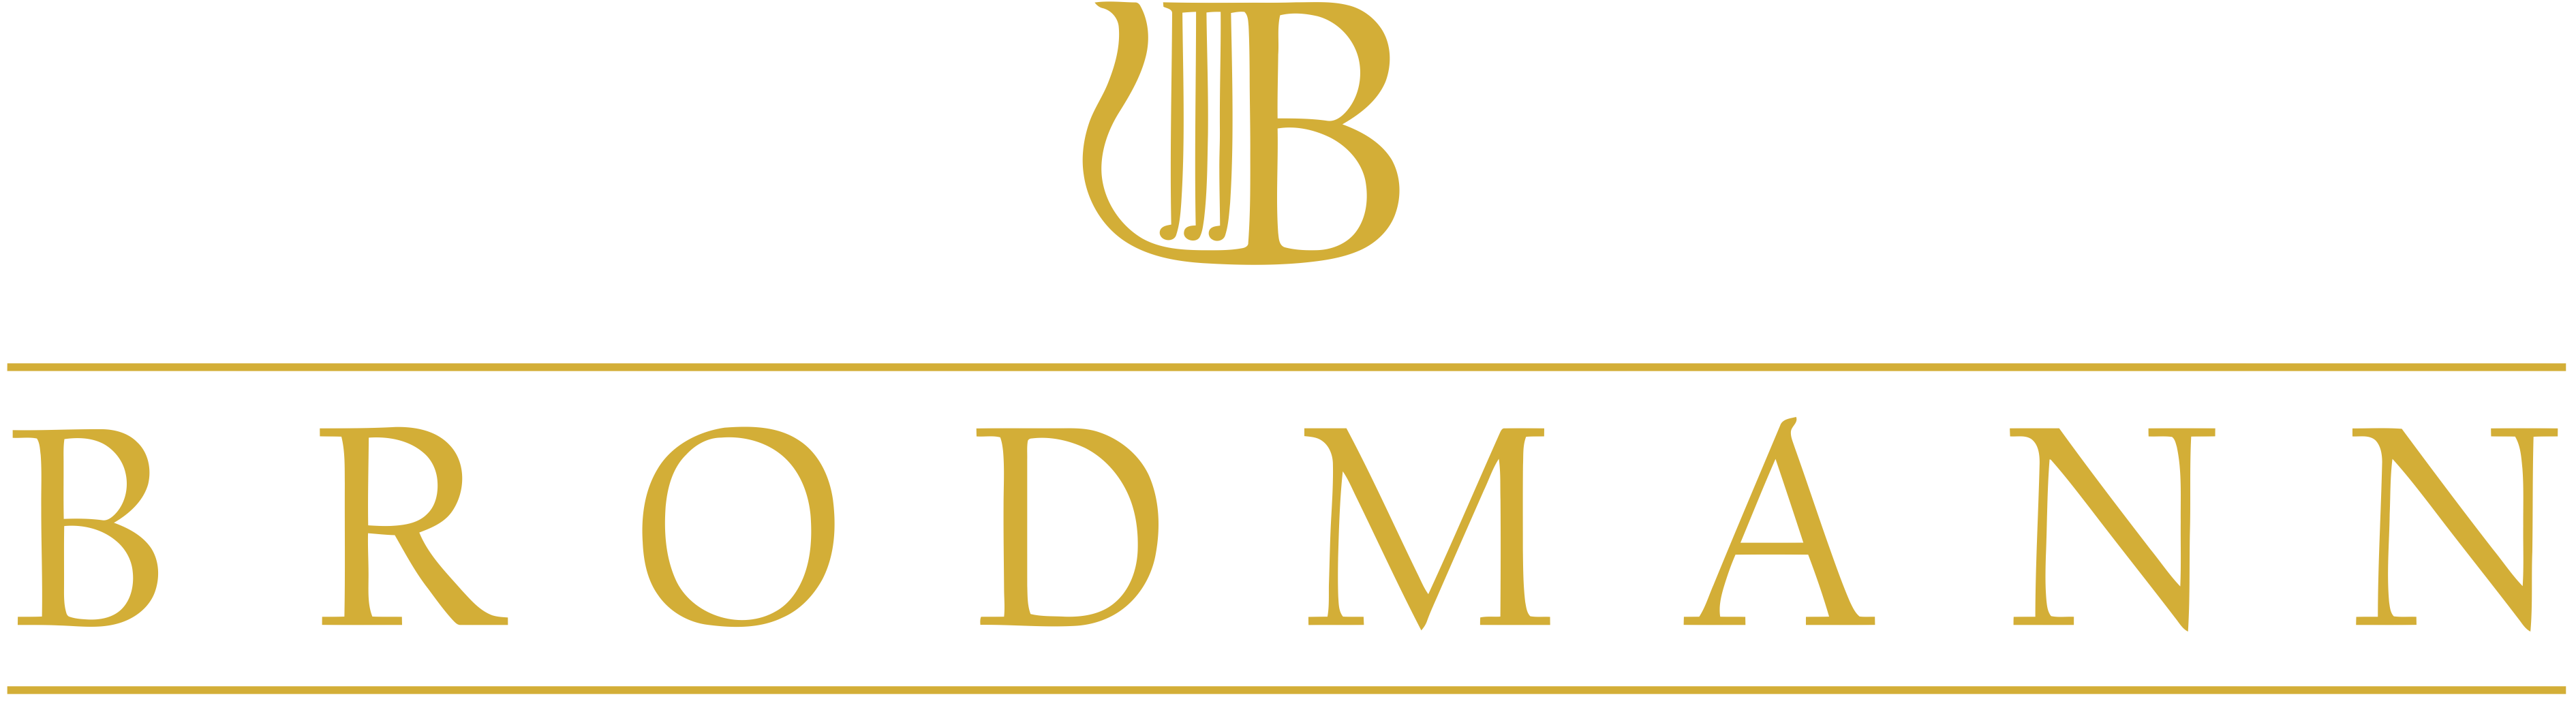 Gold Piano Logo - Brodmann Piano USA